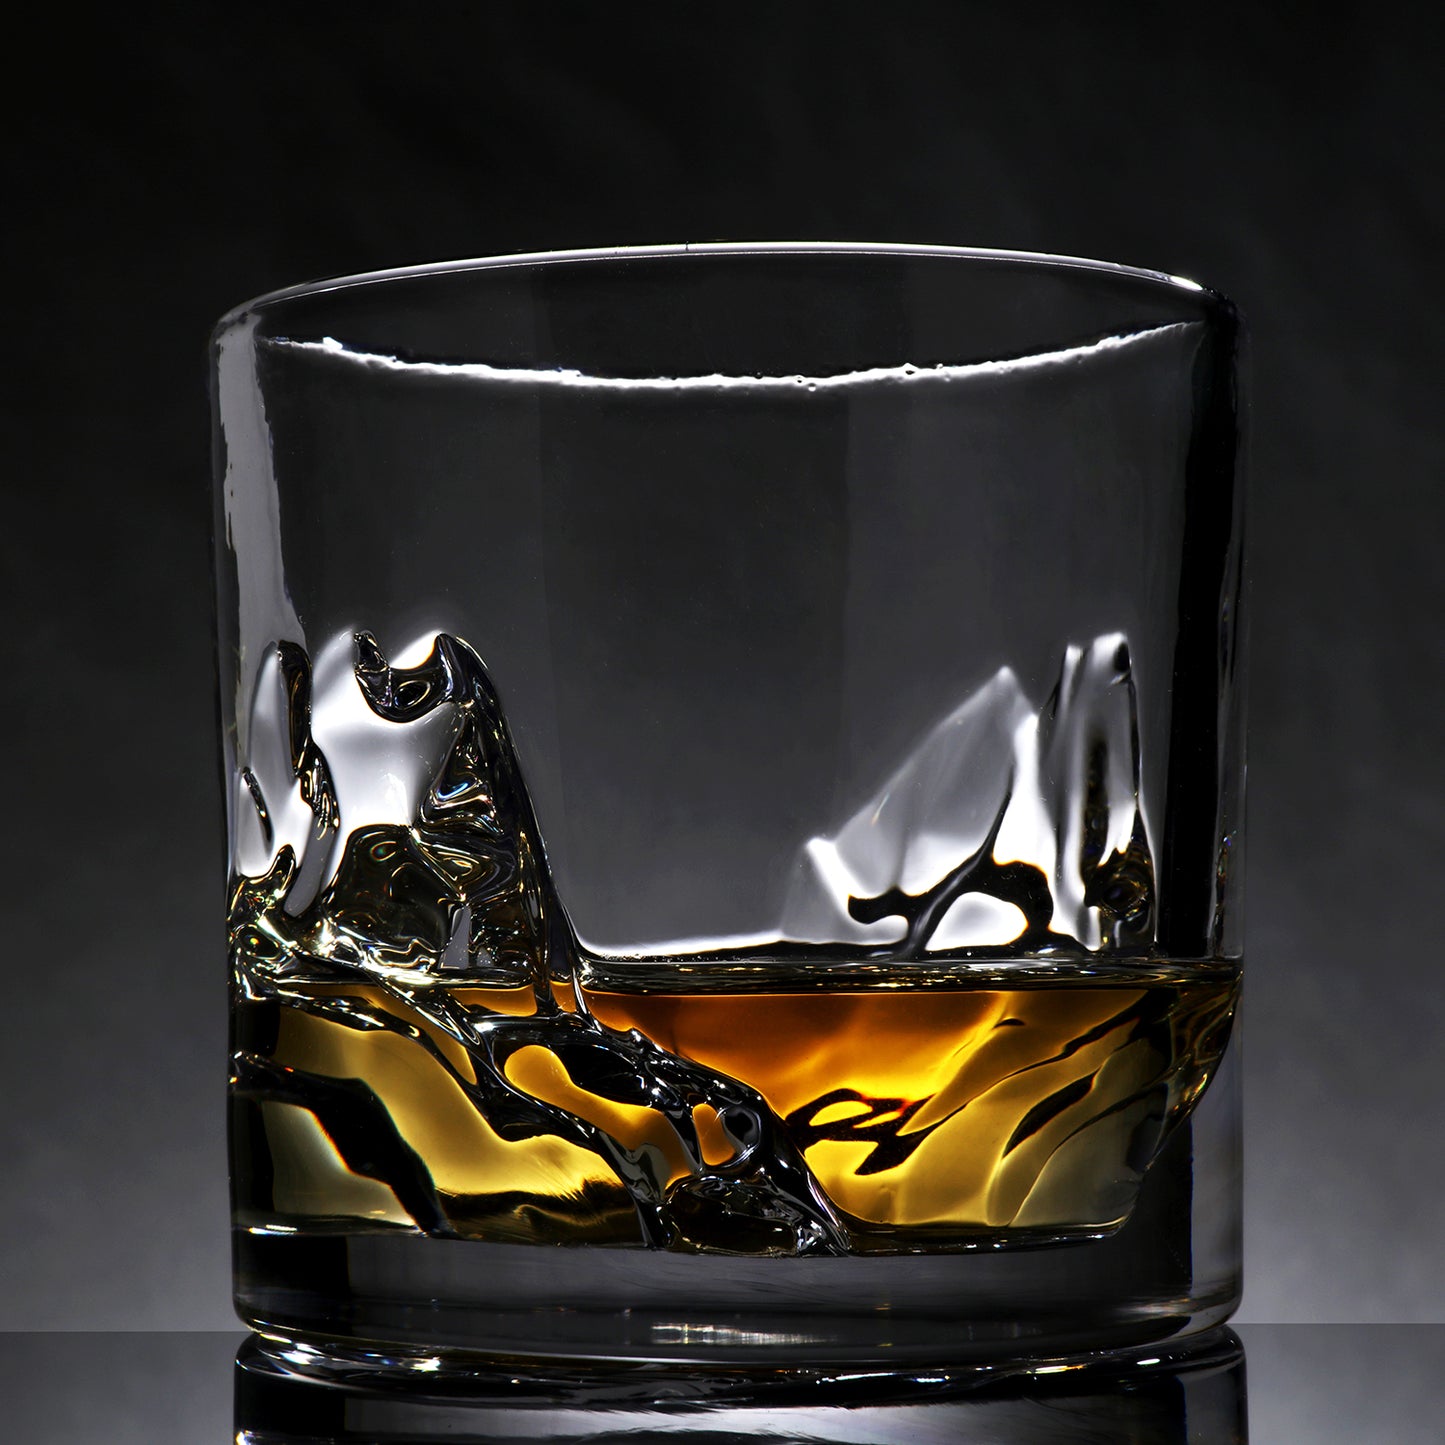 Grand Canyon - Set of 2 Whiskey Glasses